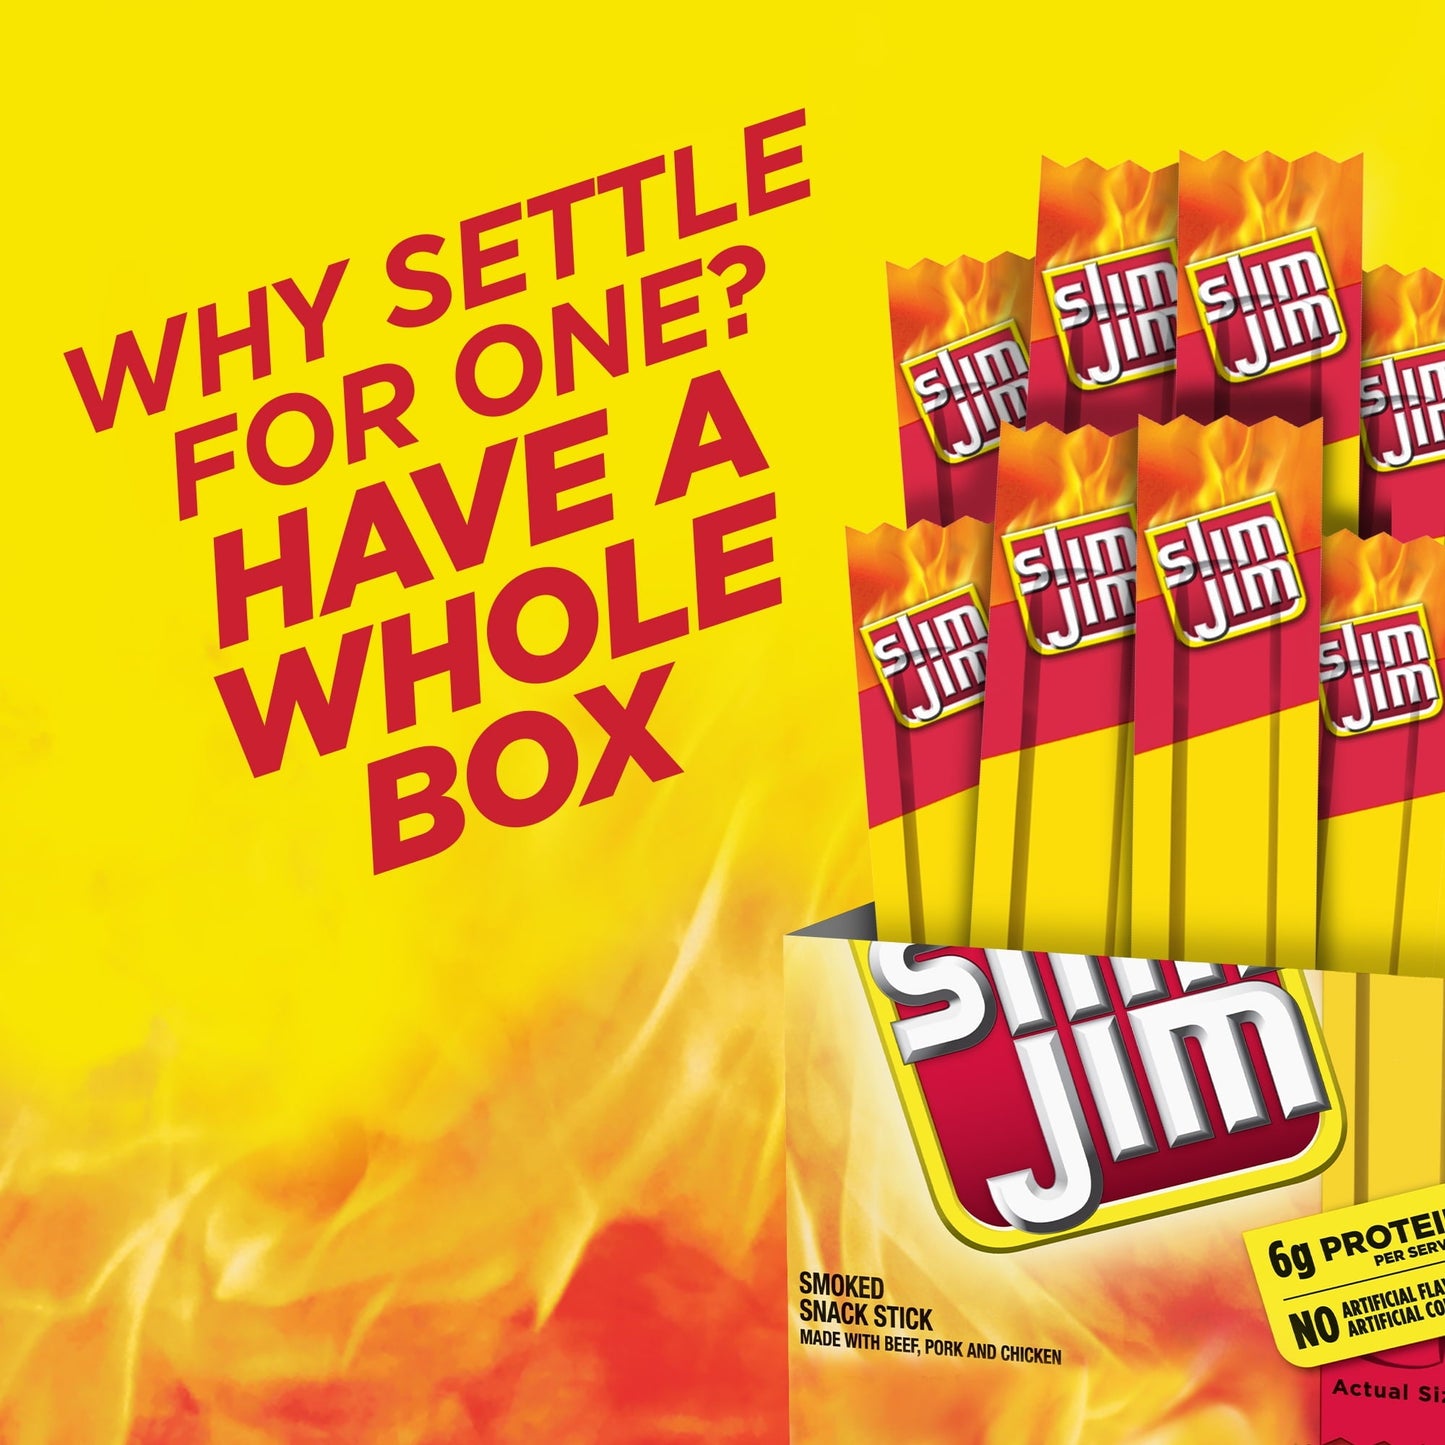 Slim Jim Original Smoked Snack Sized Sticks, 0.28 oz. Meat Sticks, 14-Count Box